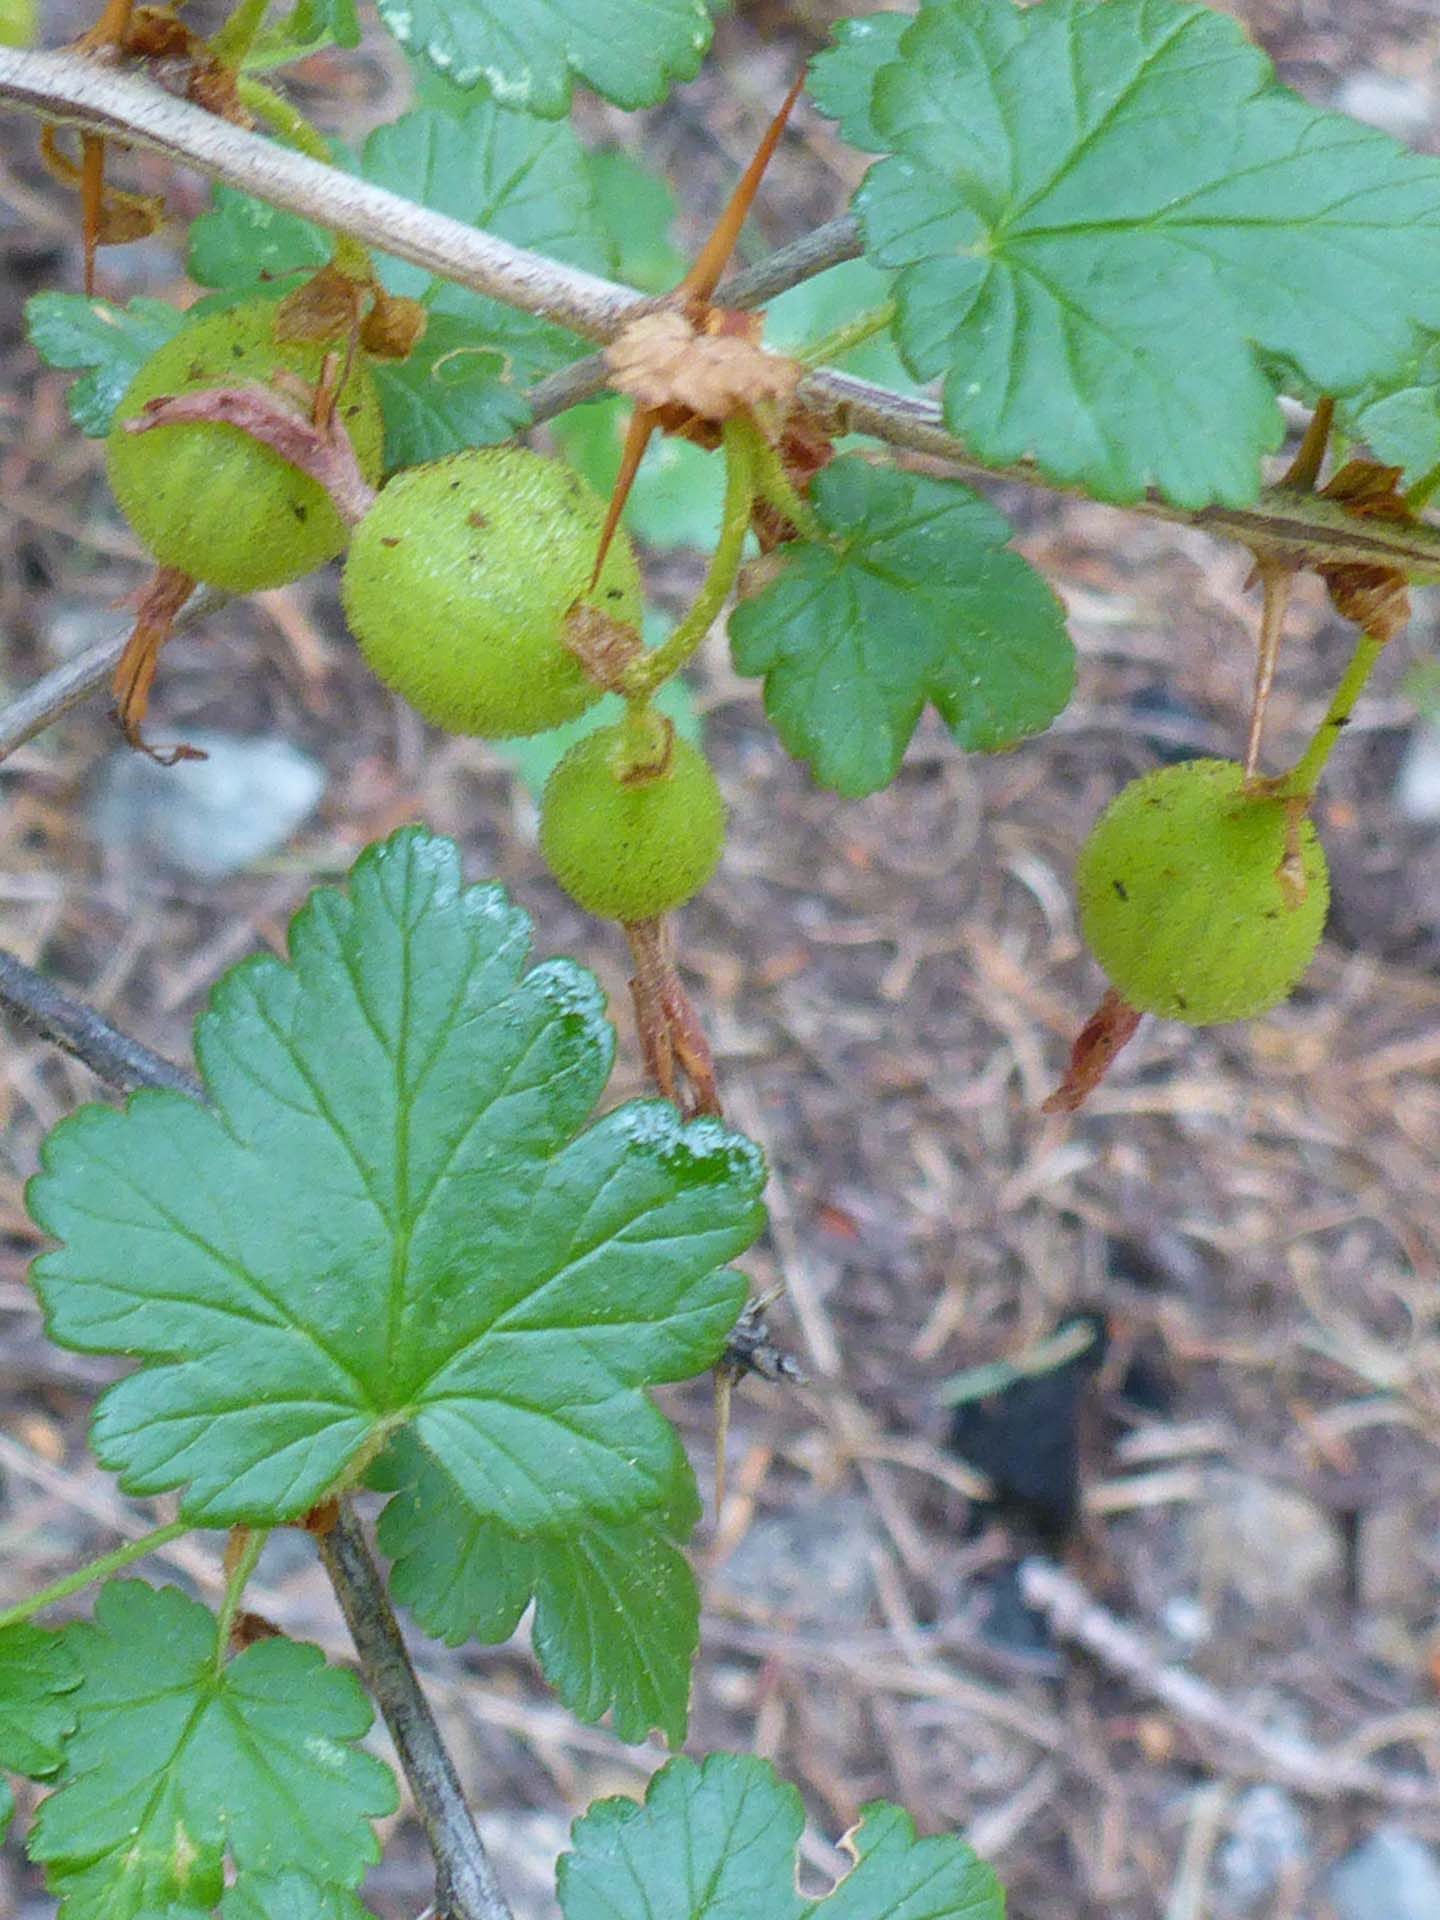 Gummy gooseberry in fruit. D. Burk.